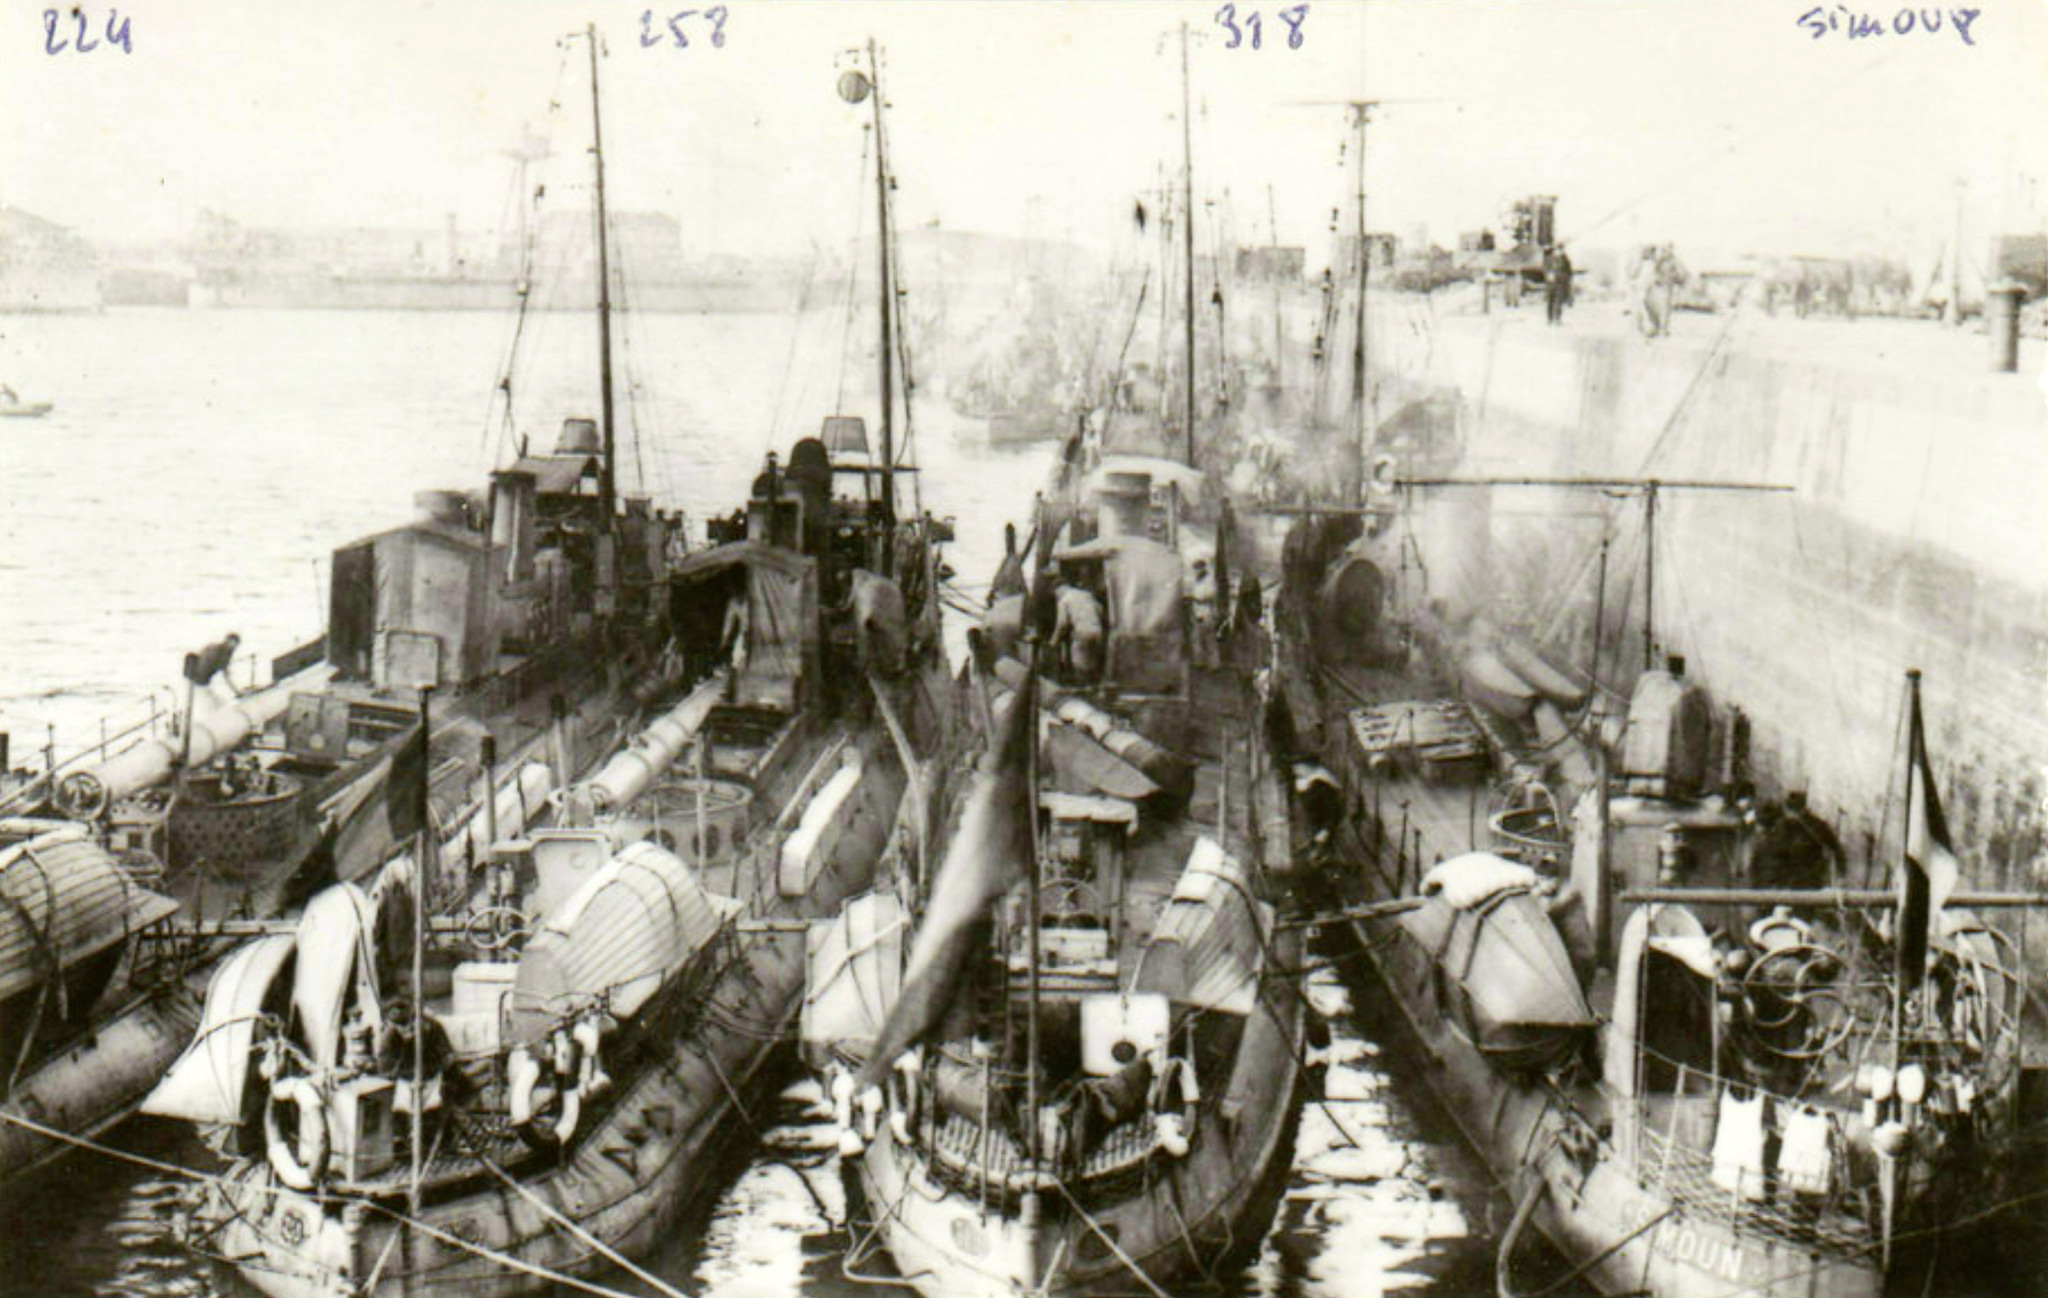 TB 224-258-318-Simoun (Dunkierka 1916).jpg